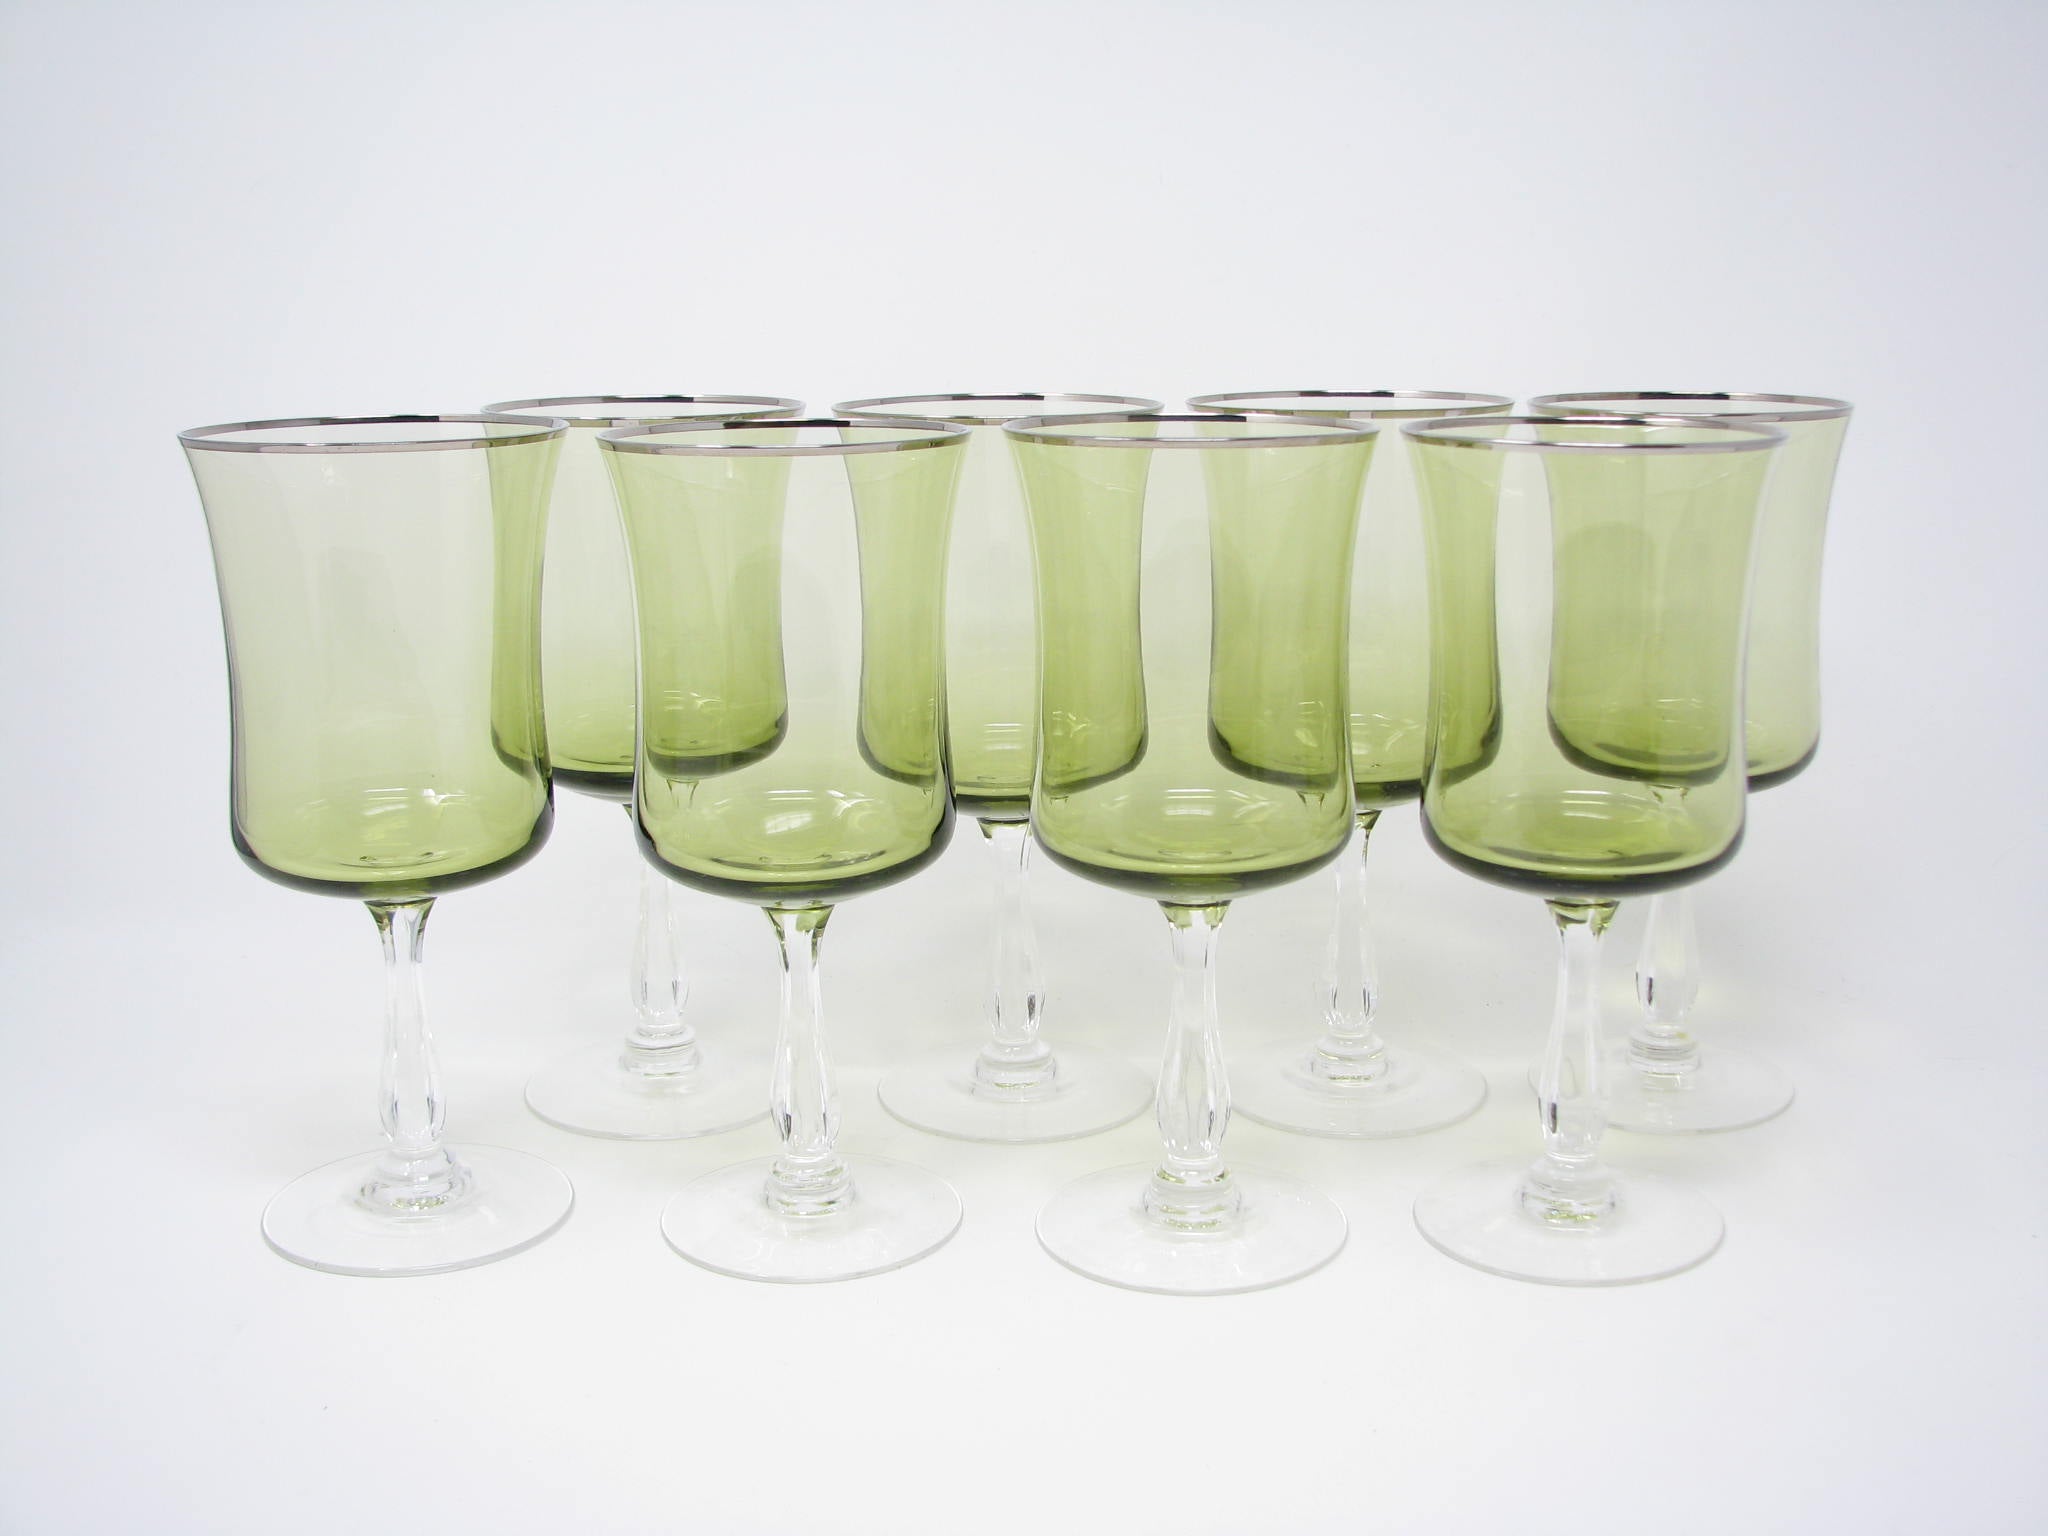 vintage green crystal mini wine glass, set of 8